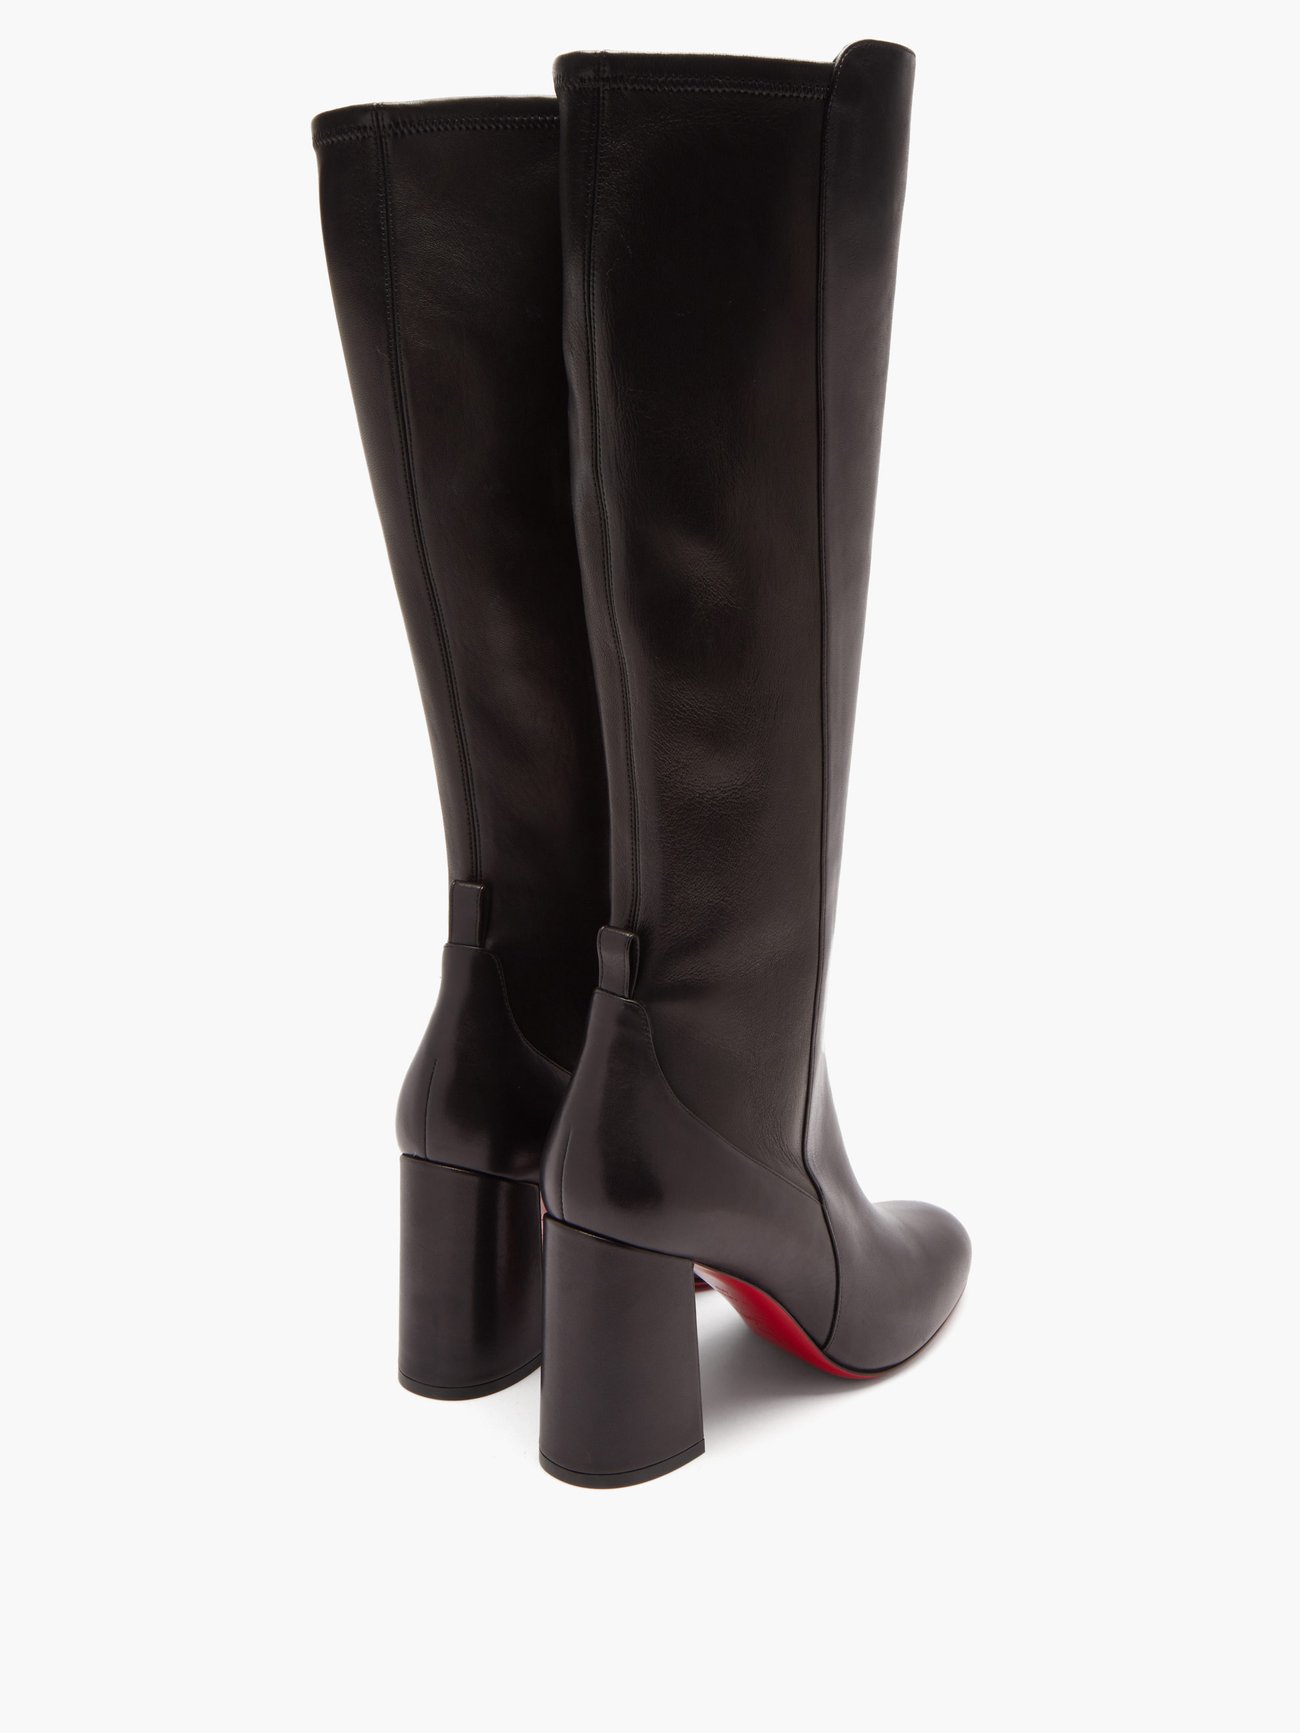 Christian Louboutin - Kronobotte 85 Leather Knee Boots - Womens - Black